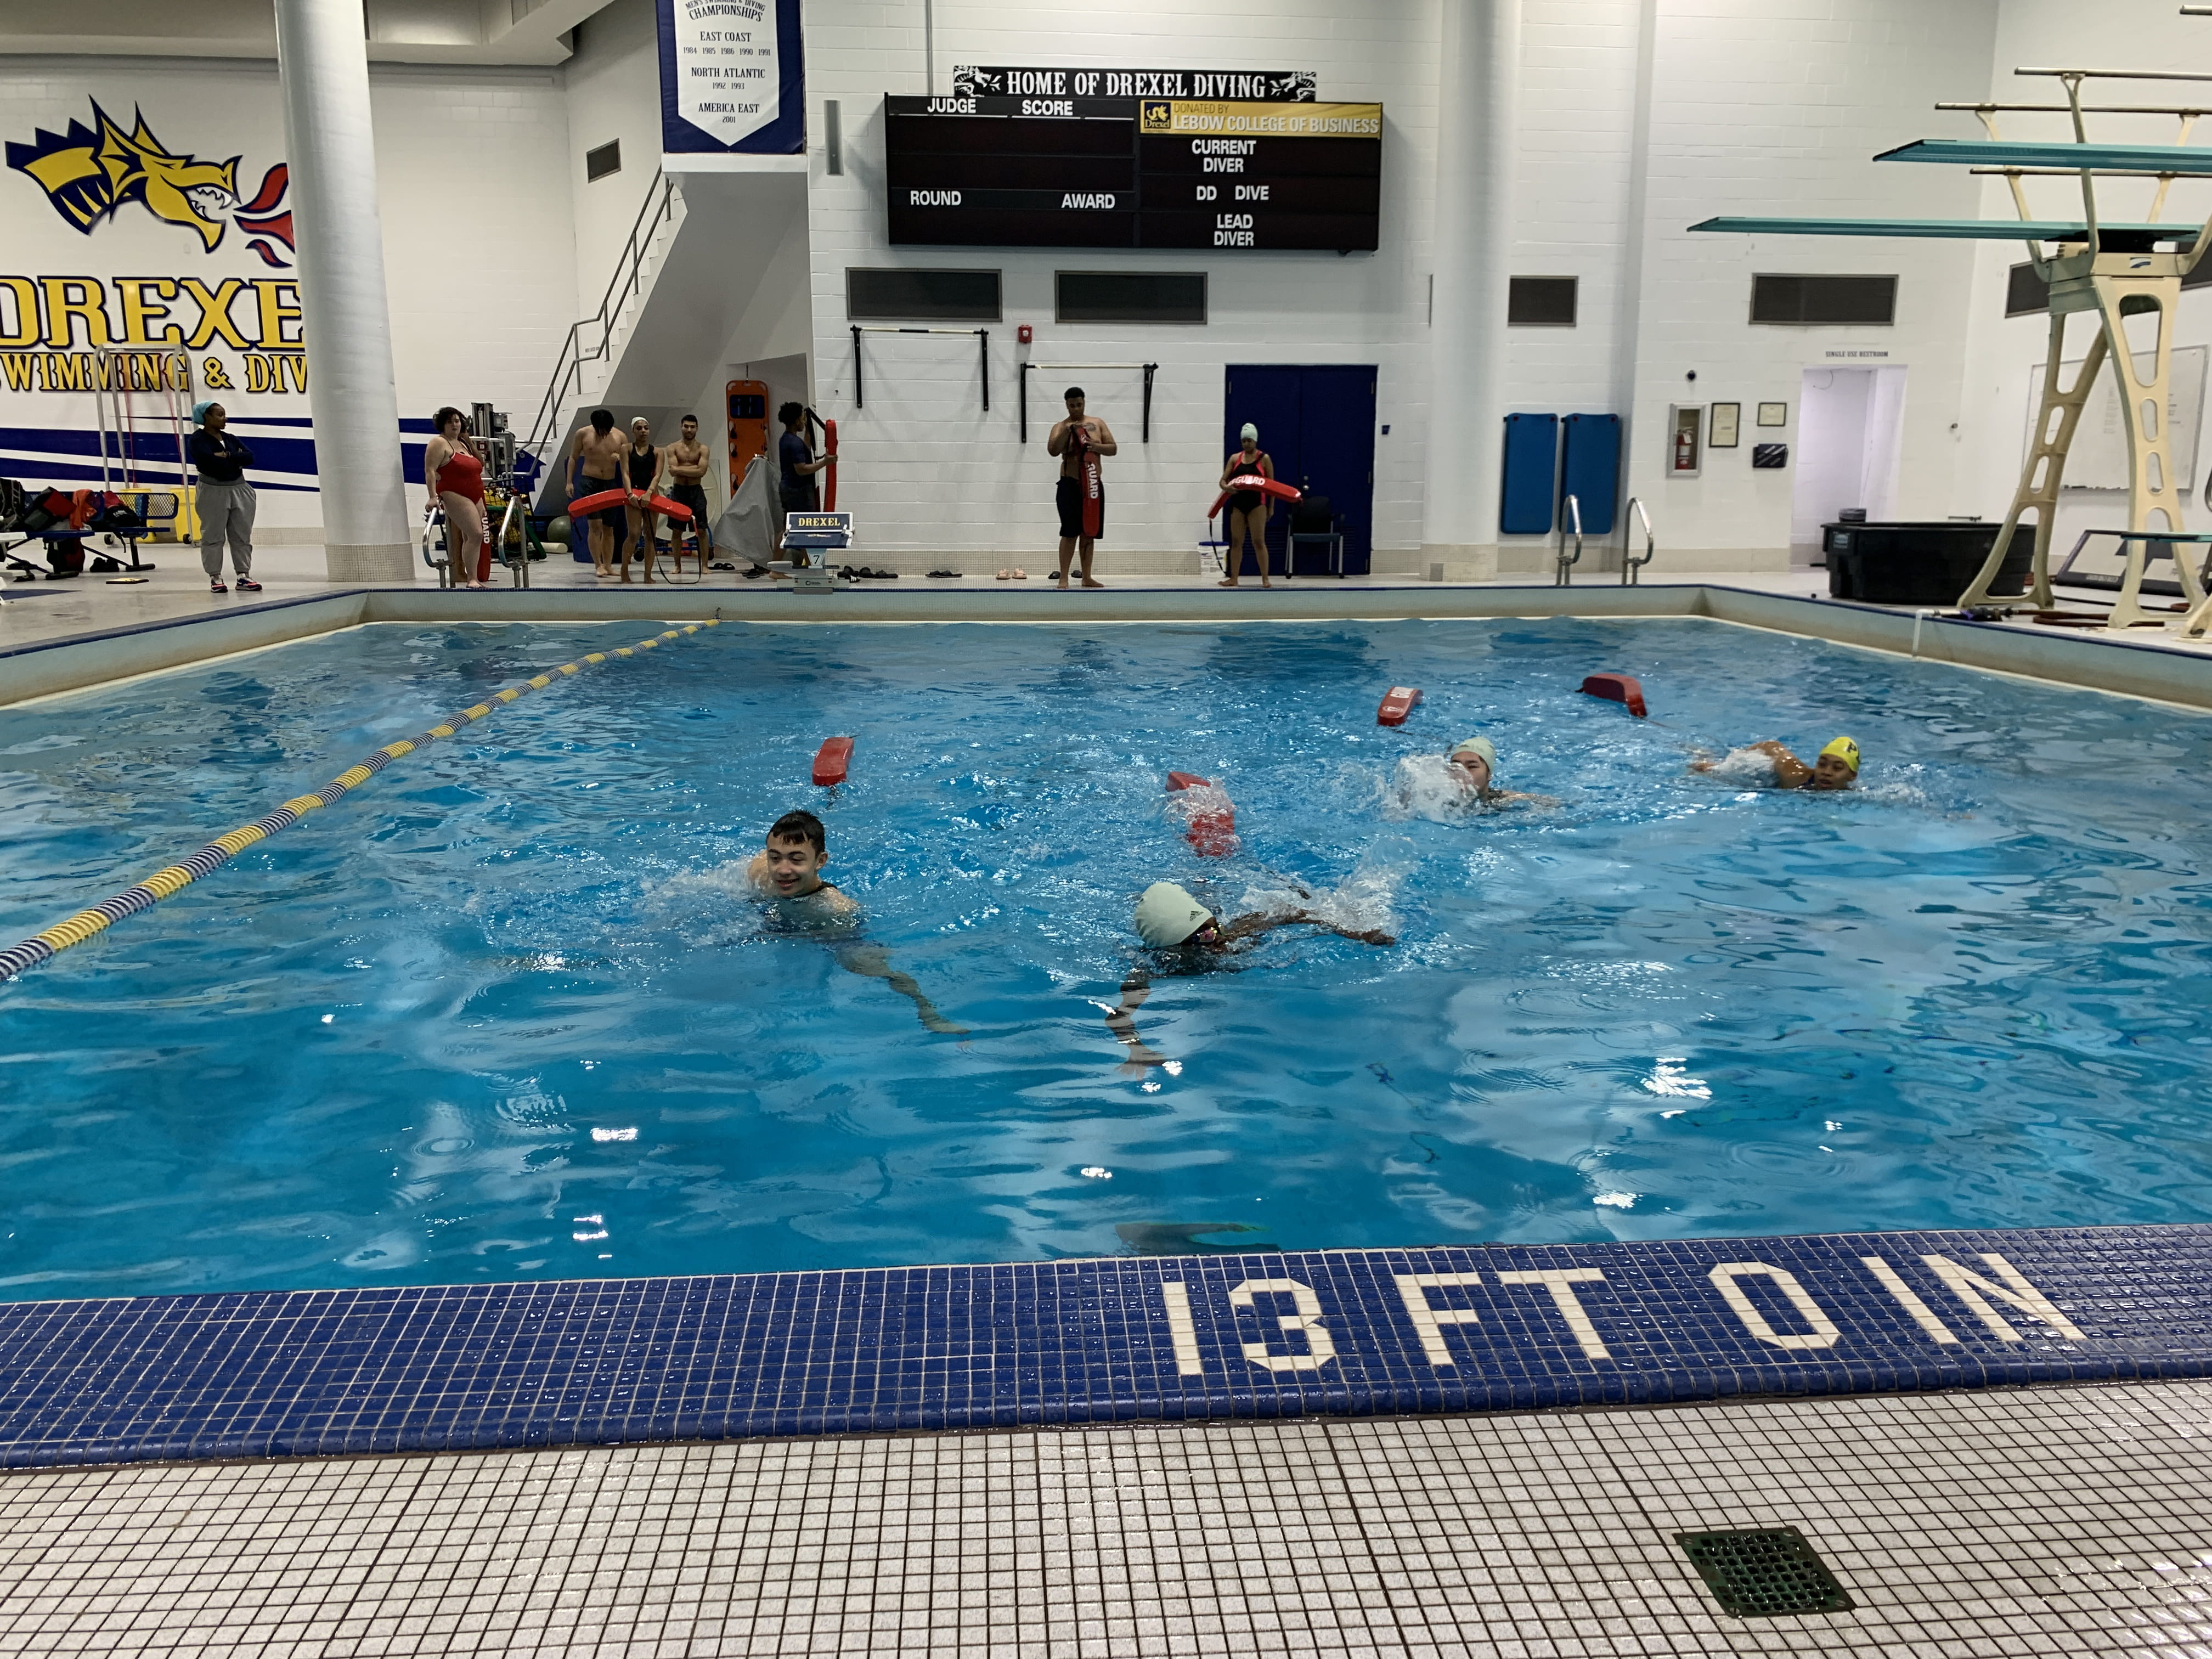 Participants training in Drexel’s pool. Photo courtesy Rebecca Fabiano.